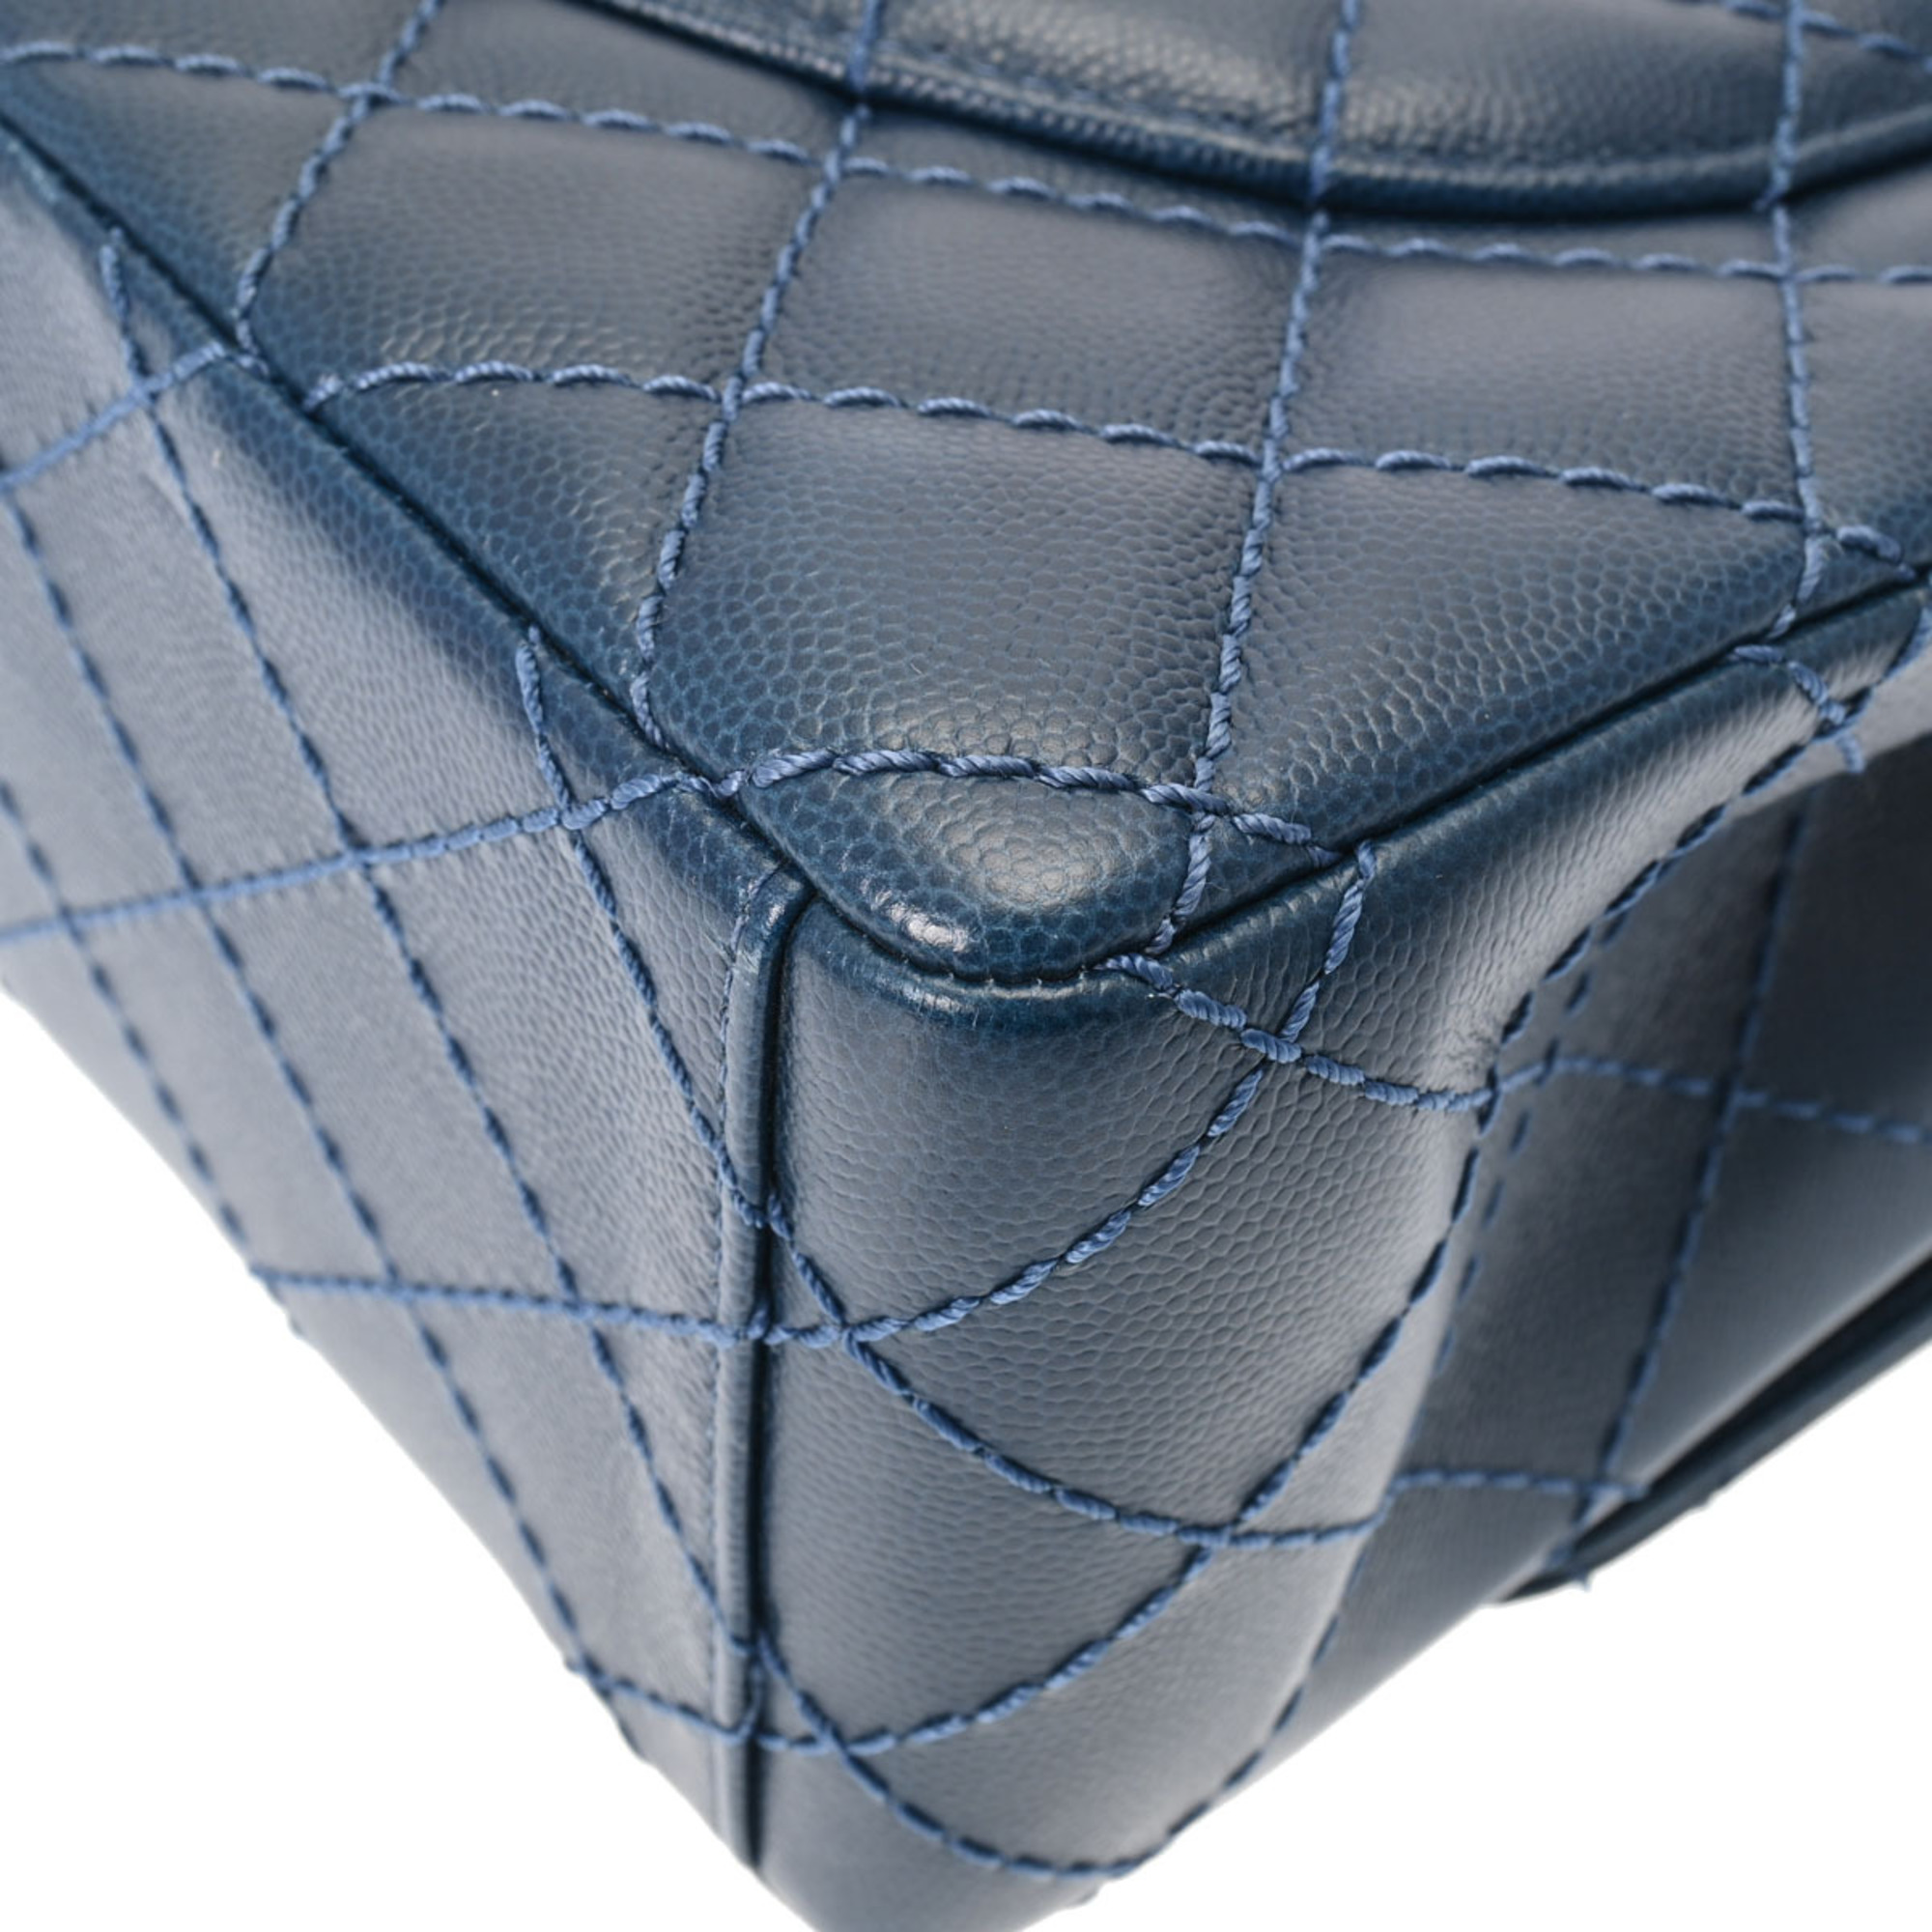 CHANEL Big Matelasse 34cm Chain Shoulder Dark Blue Tone A58601 Women's Caviar Skin Bag